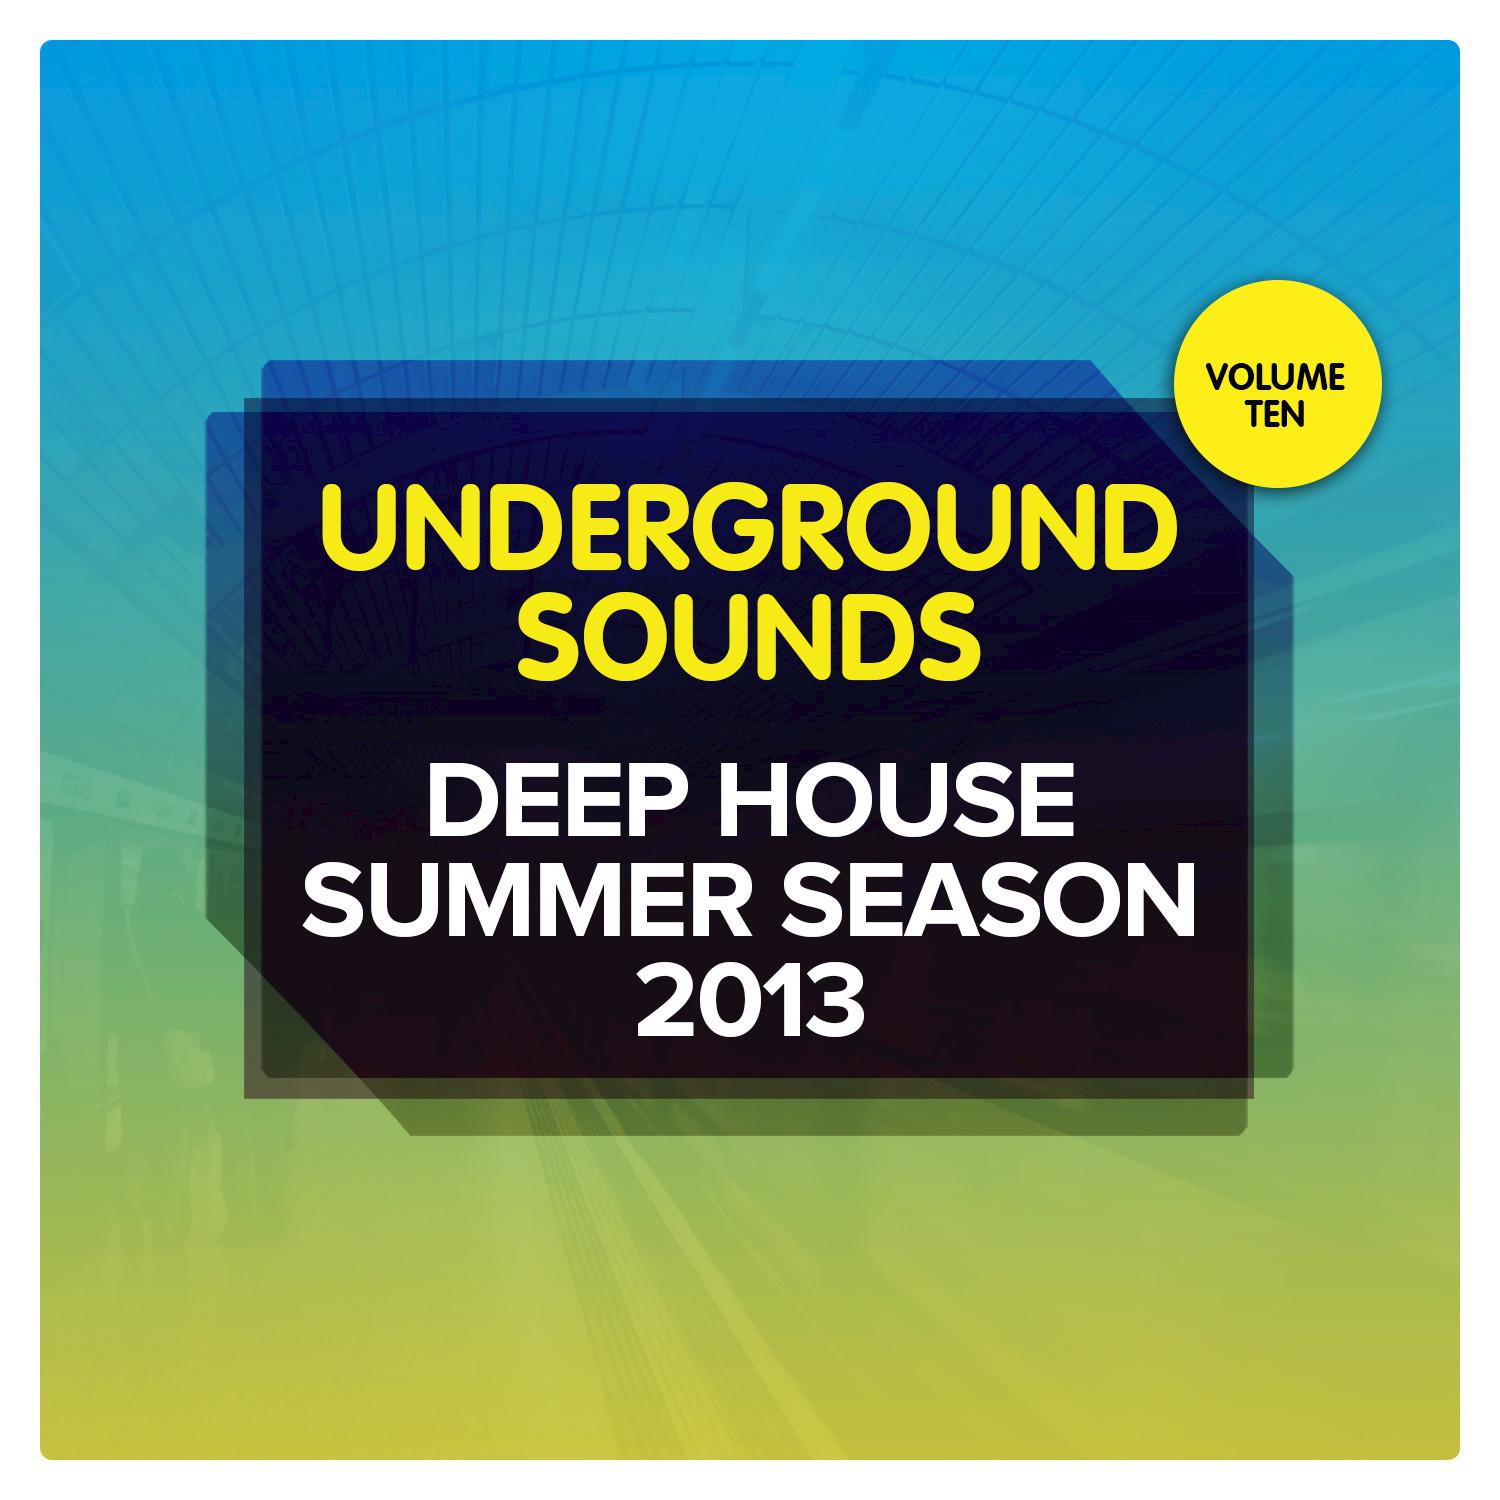 Deep House Summer Season 2013 - Underground Sounds, Vol.10